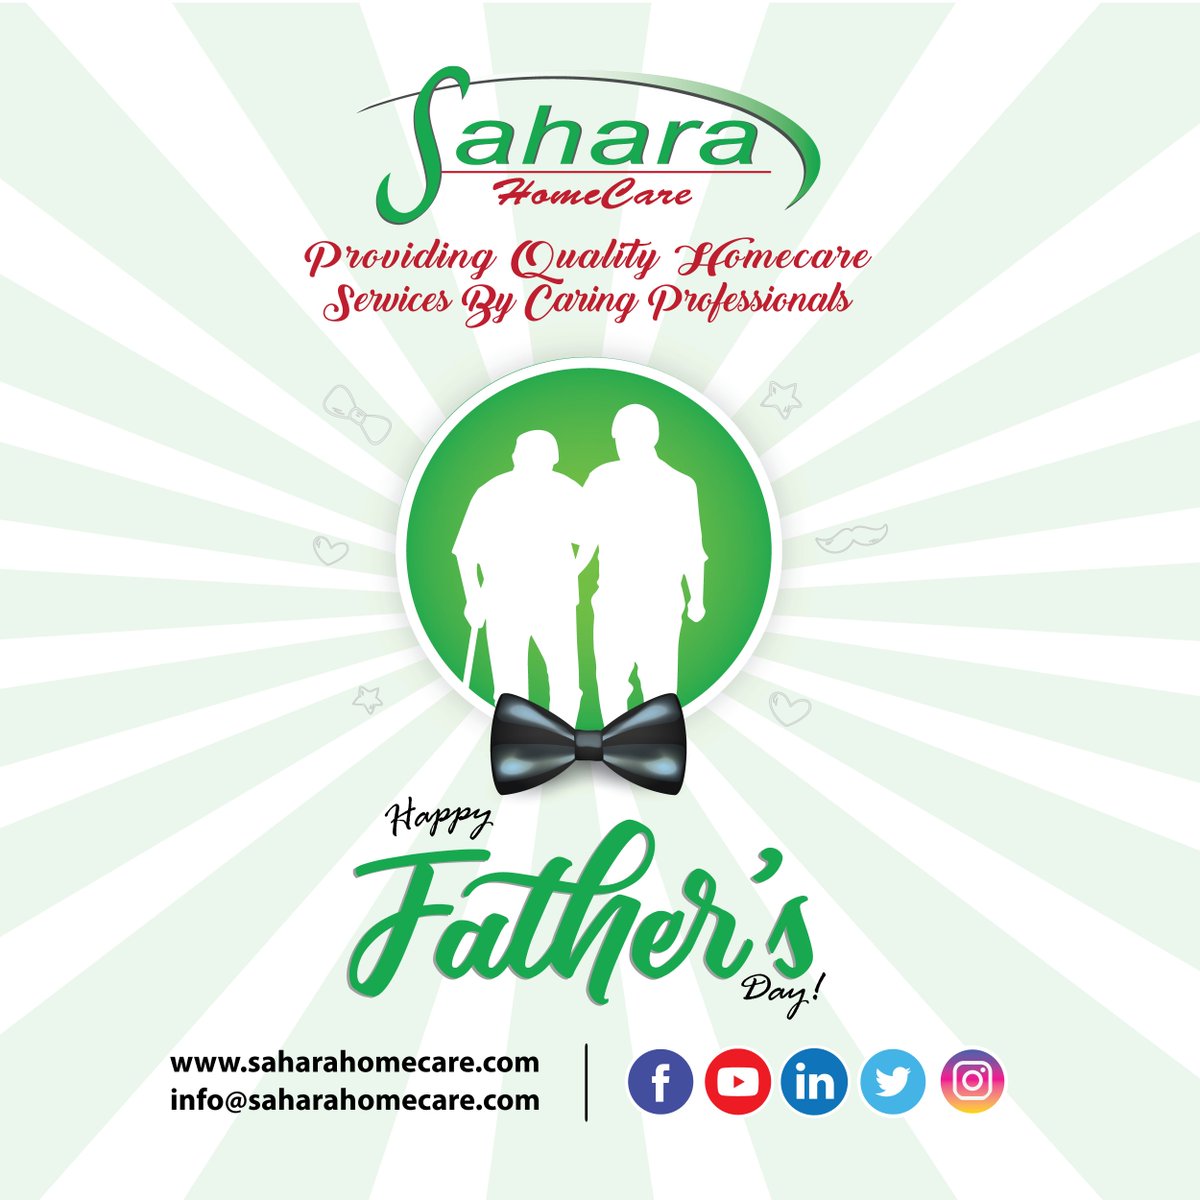 Happy Father’s Day! #homecare #saharahomecare #fathersday #seniorcare #seniorcareprovider #homecareprovider #homecareaide #ccpprogram